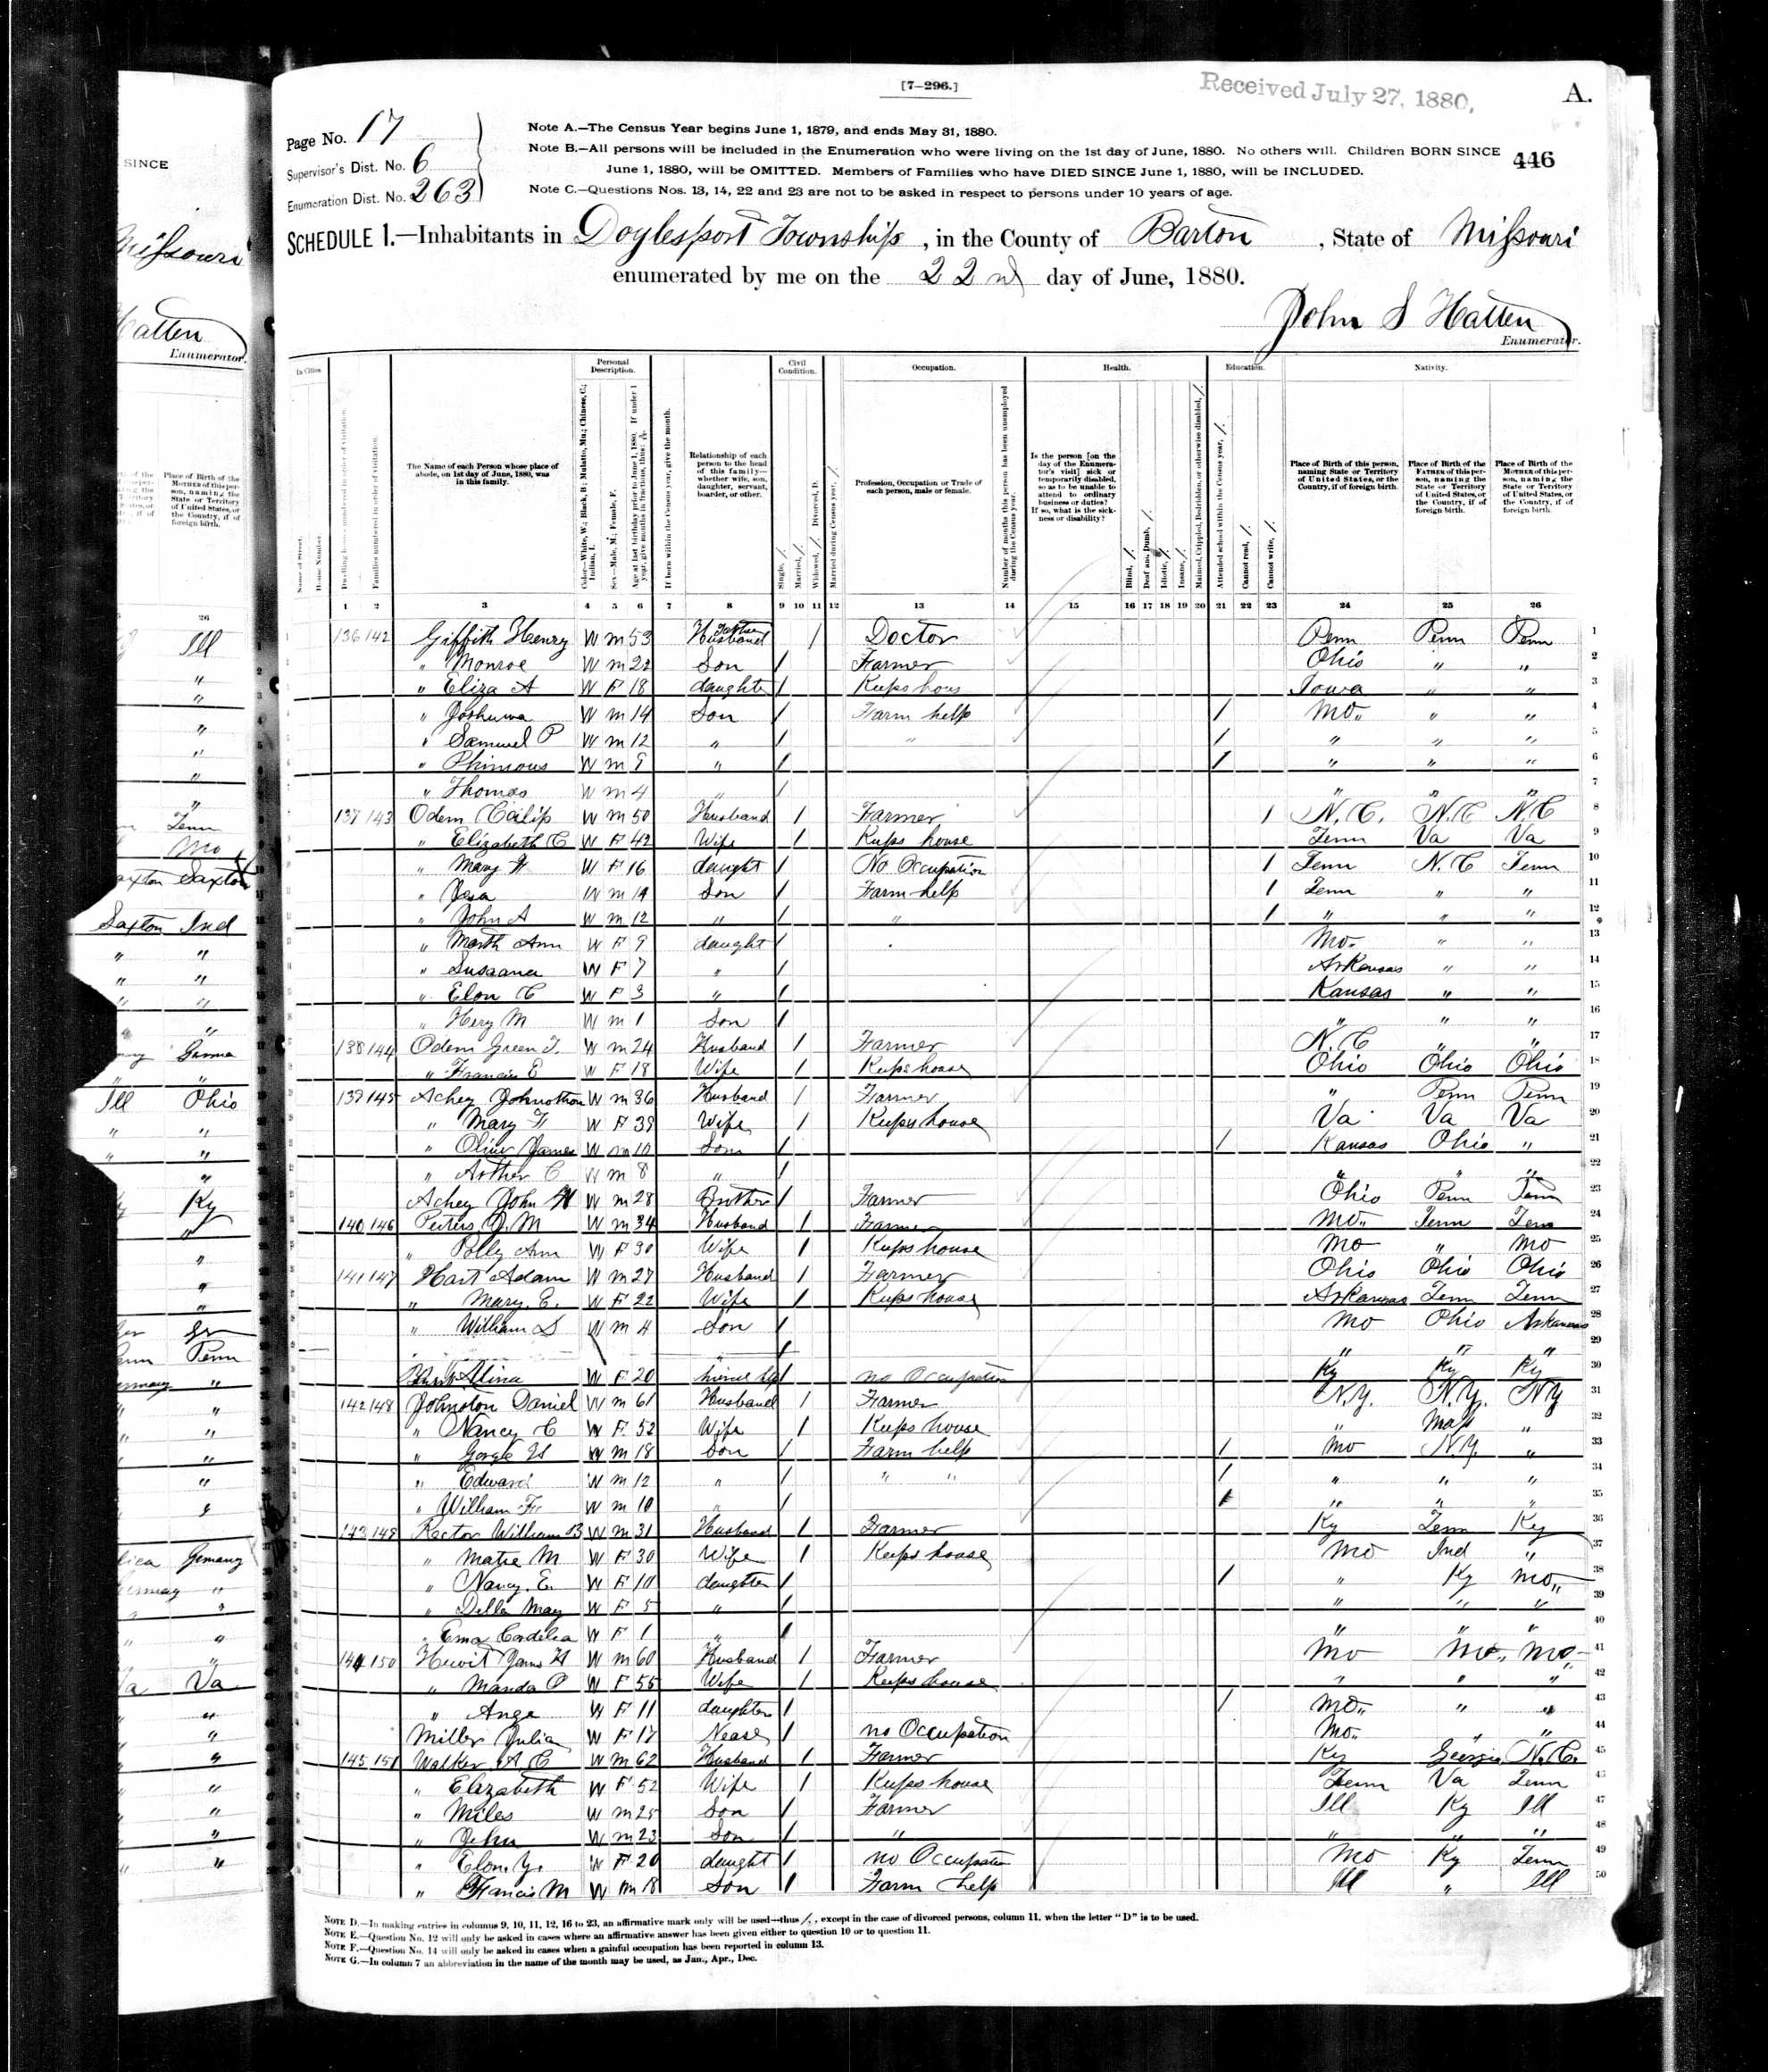 Archalus C. Walker, 1880 Barton County, Missouri, census